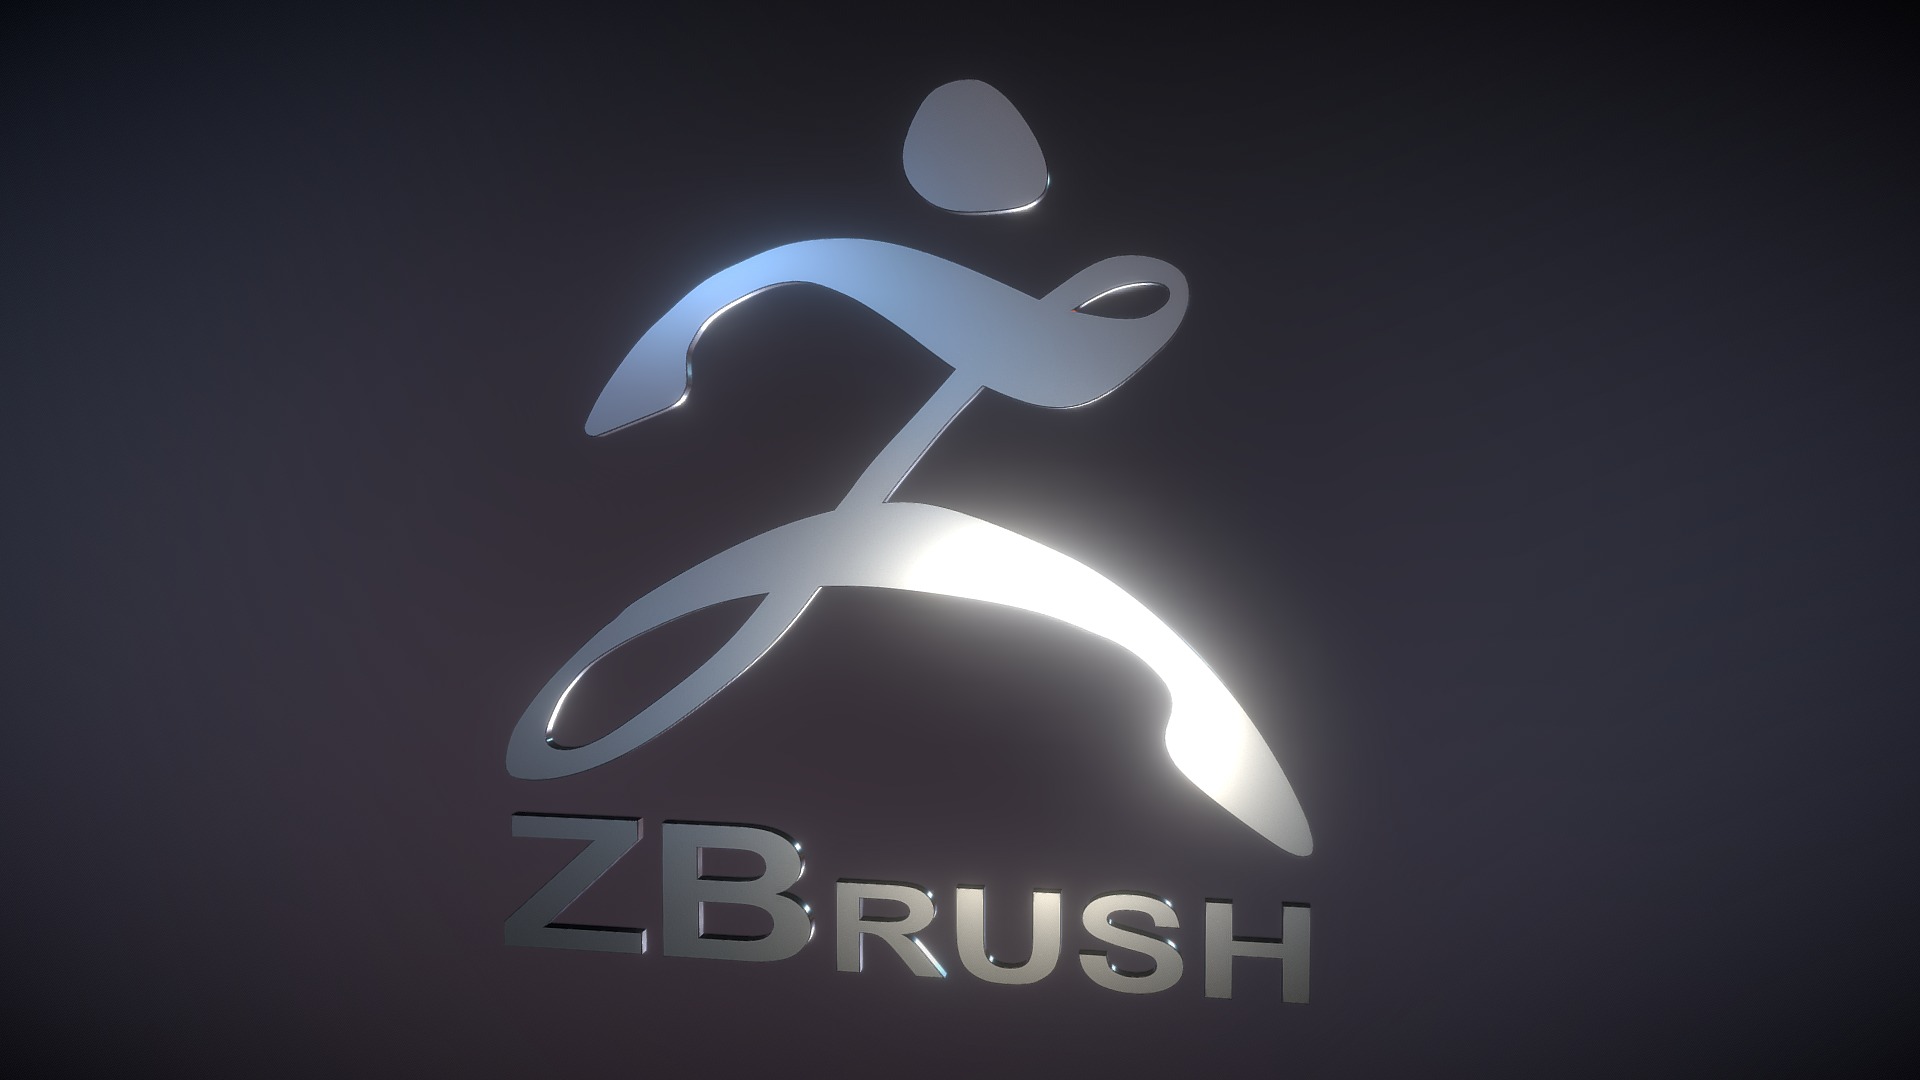 zbrush add studio logo